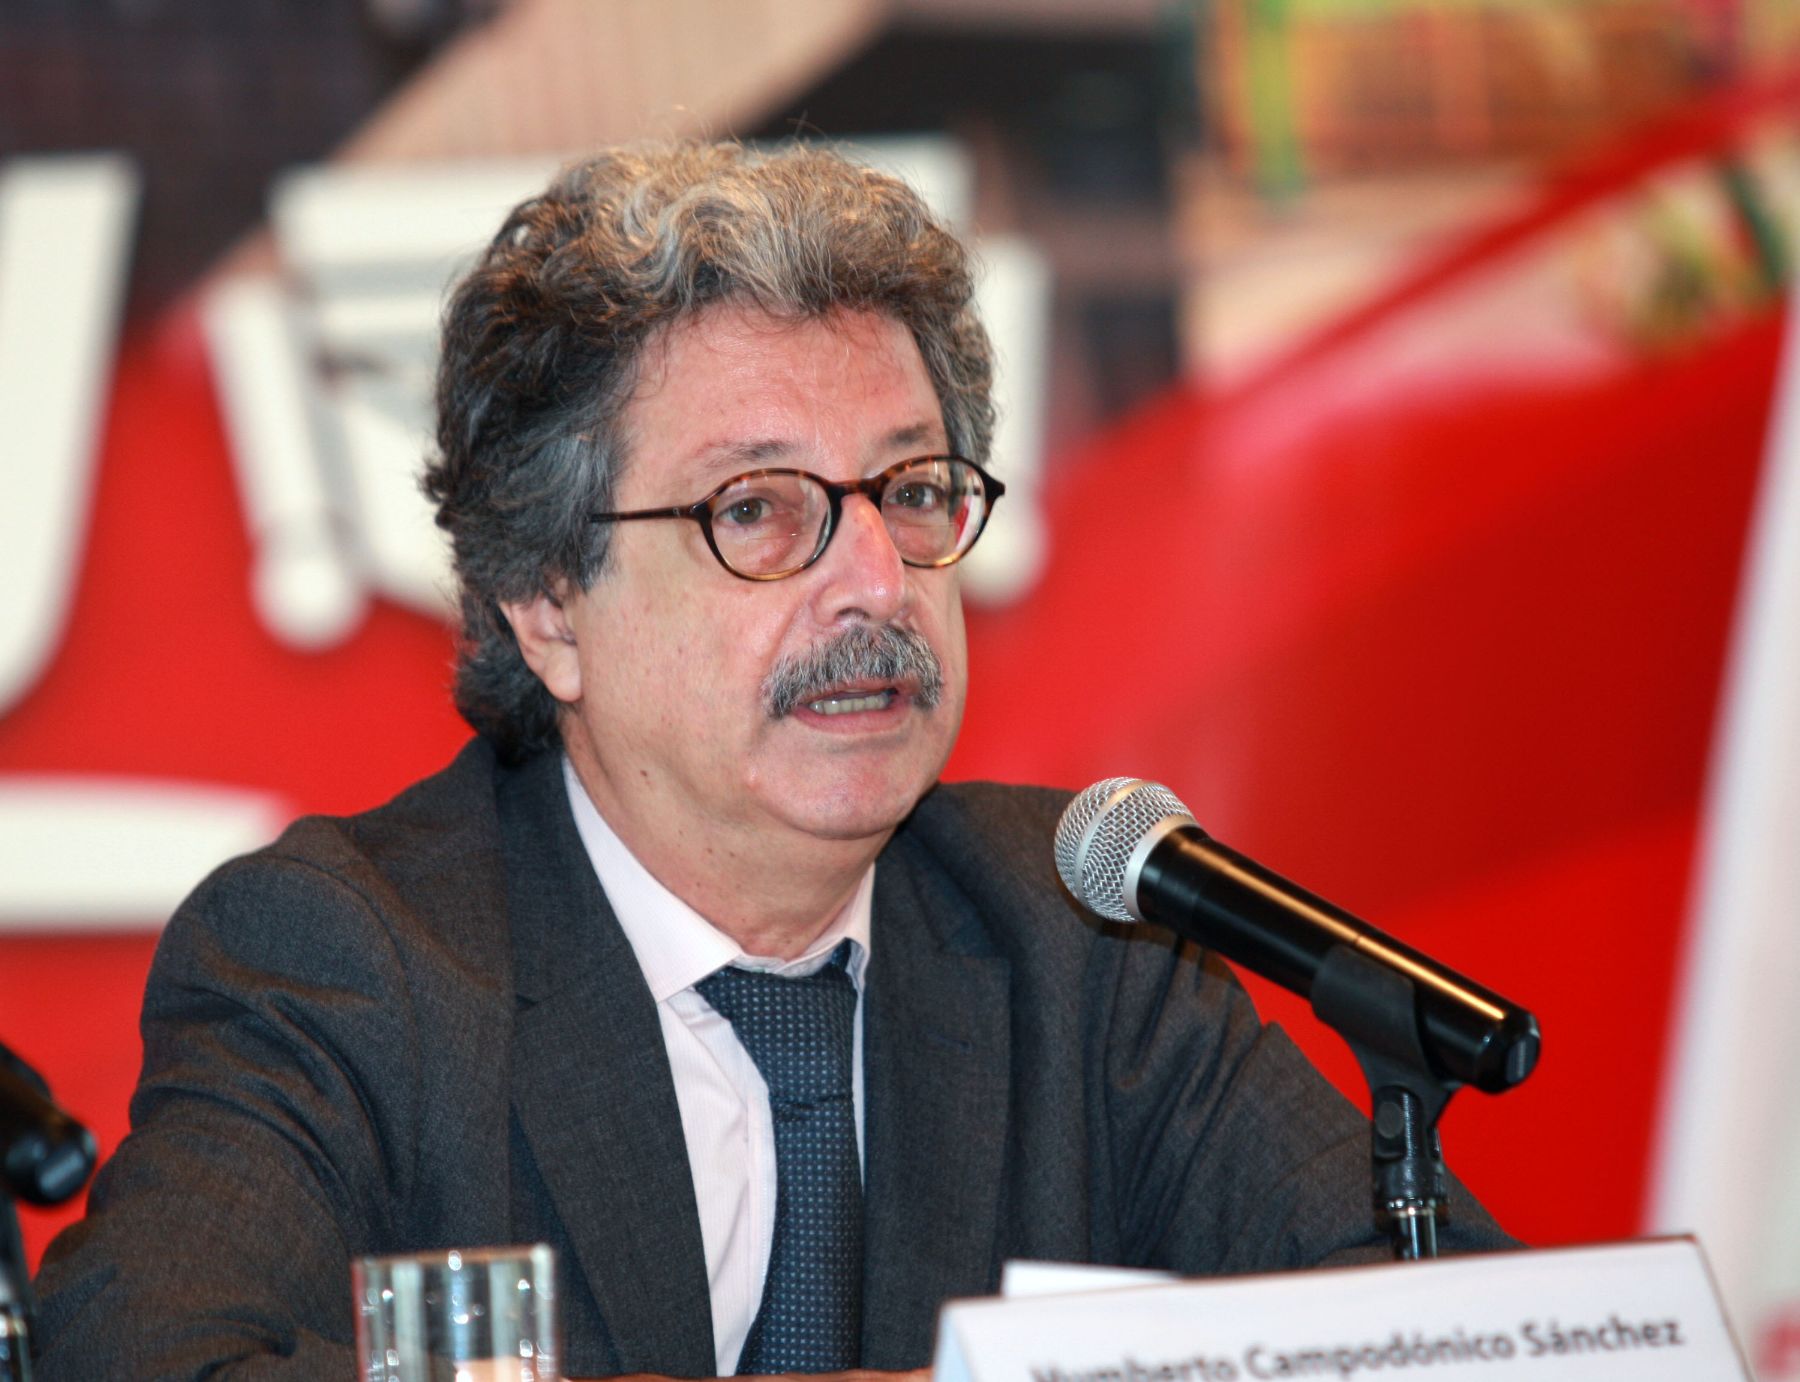 Humberto Campodonico, chief executive of Petroperu. Photo: ANDINA/Norman Córdova